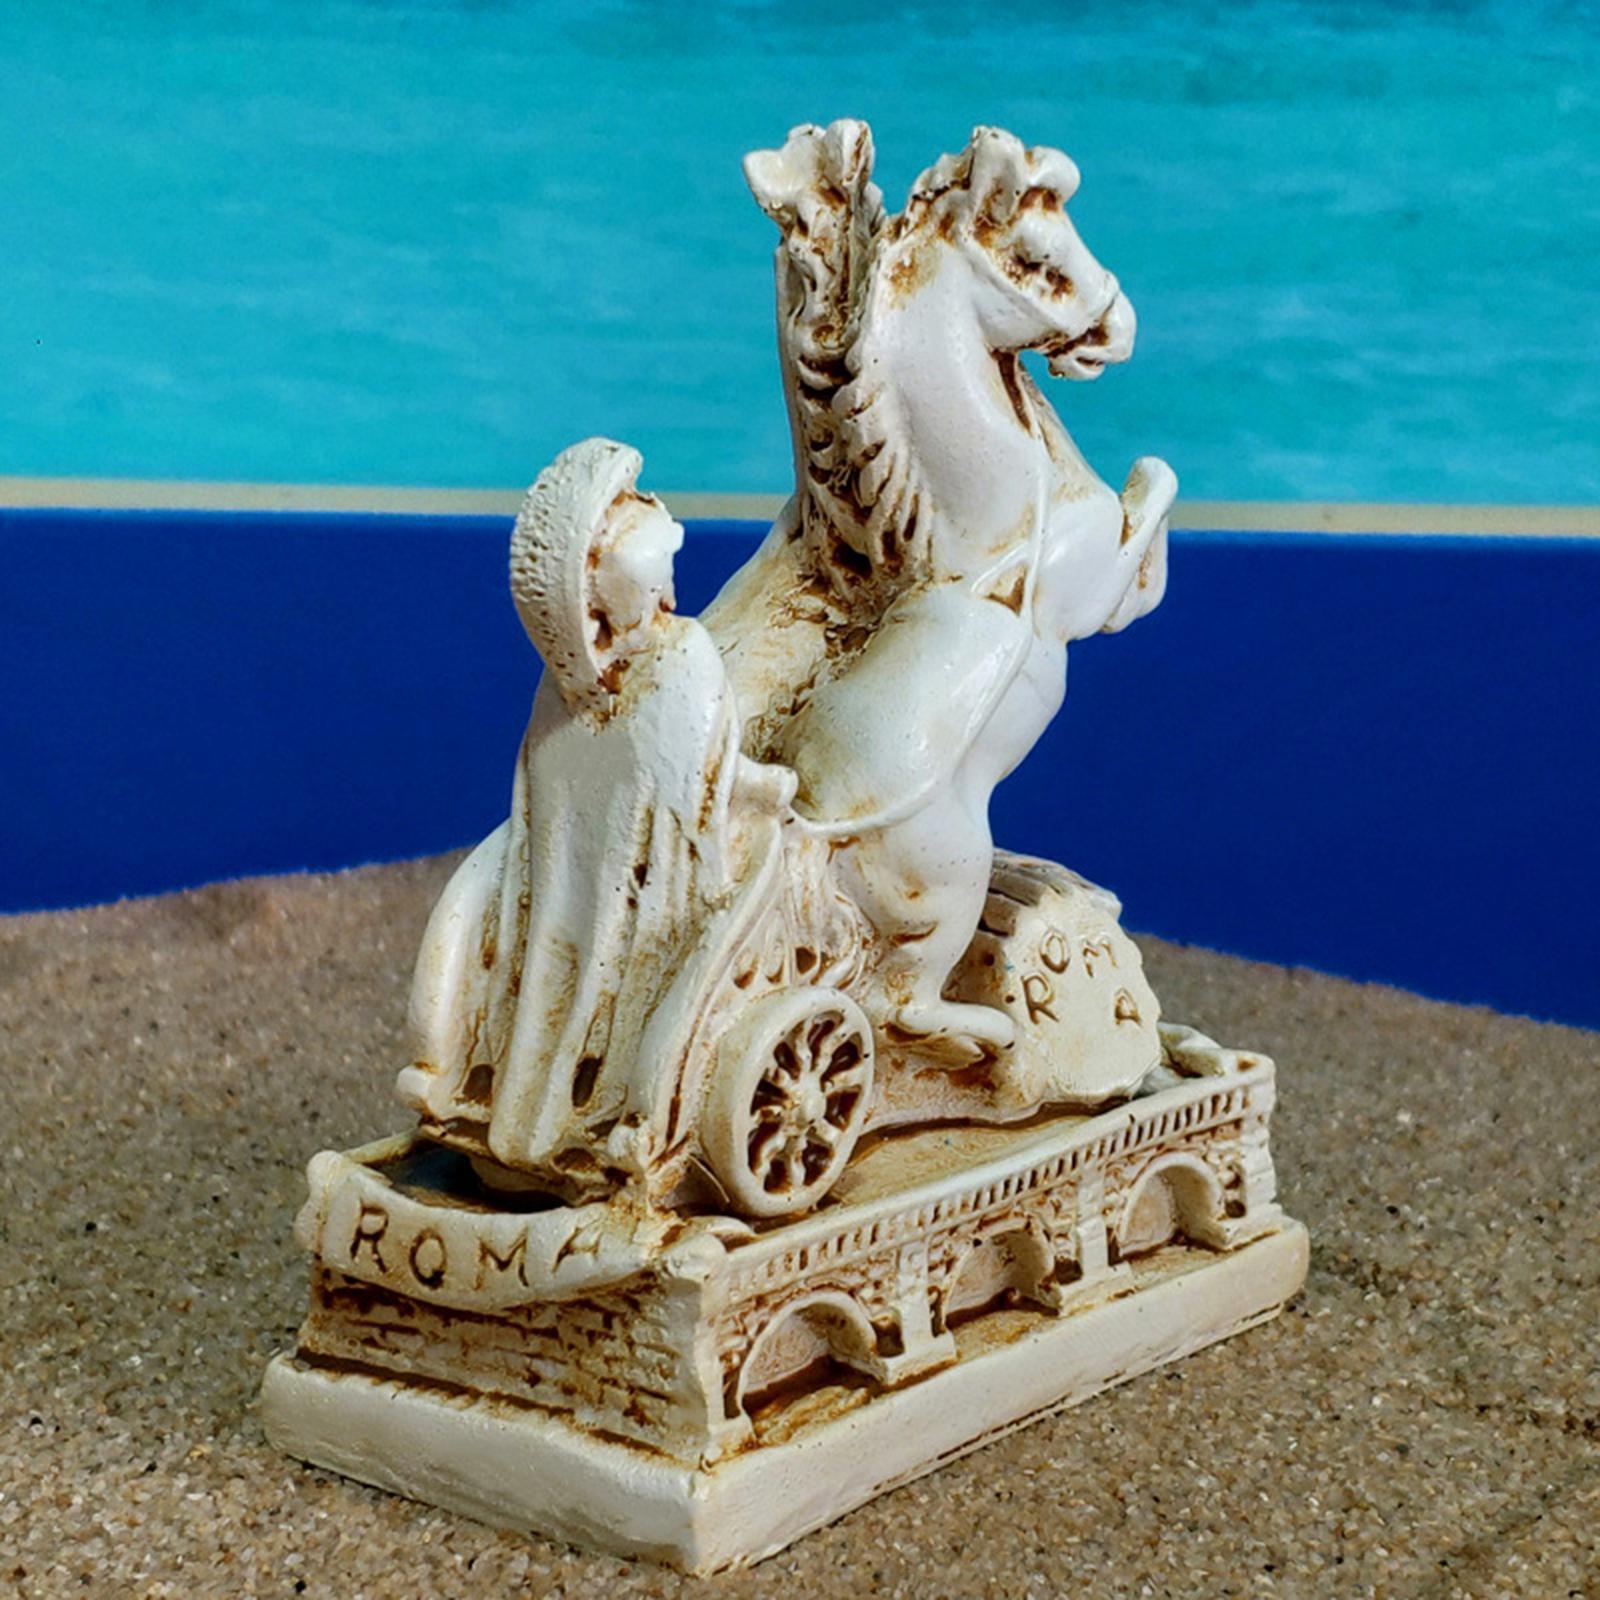 Roman Chariot Horse Sculptor Classic Figure Sculpture Italian Style